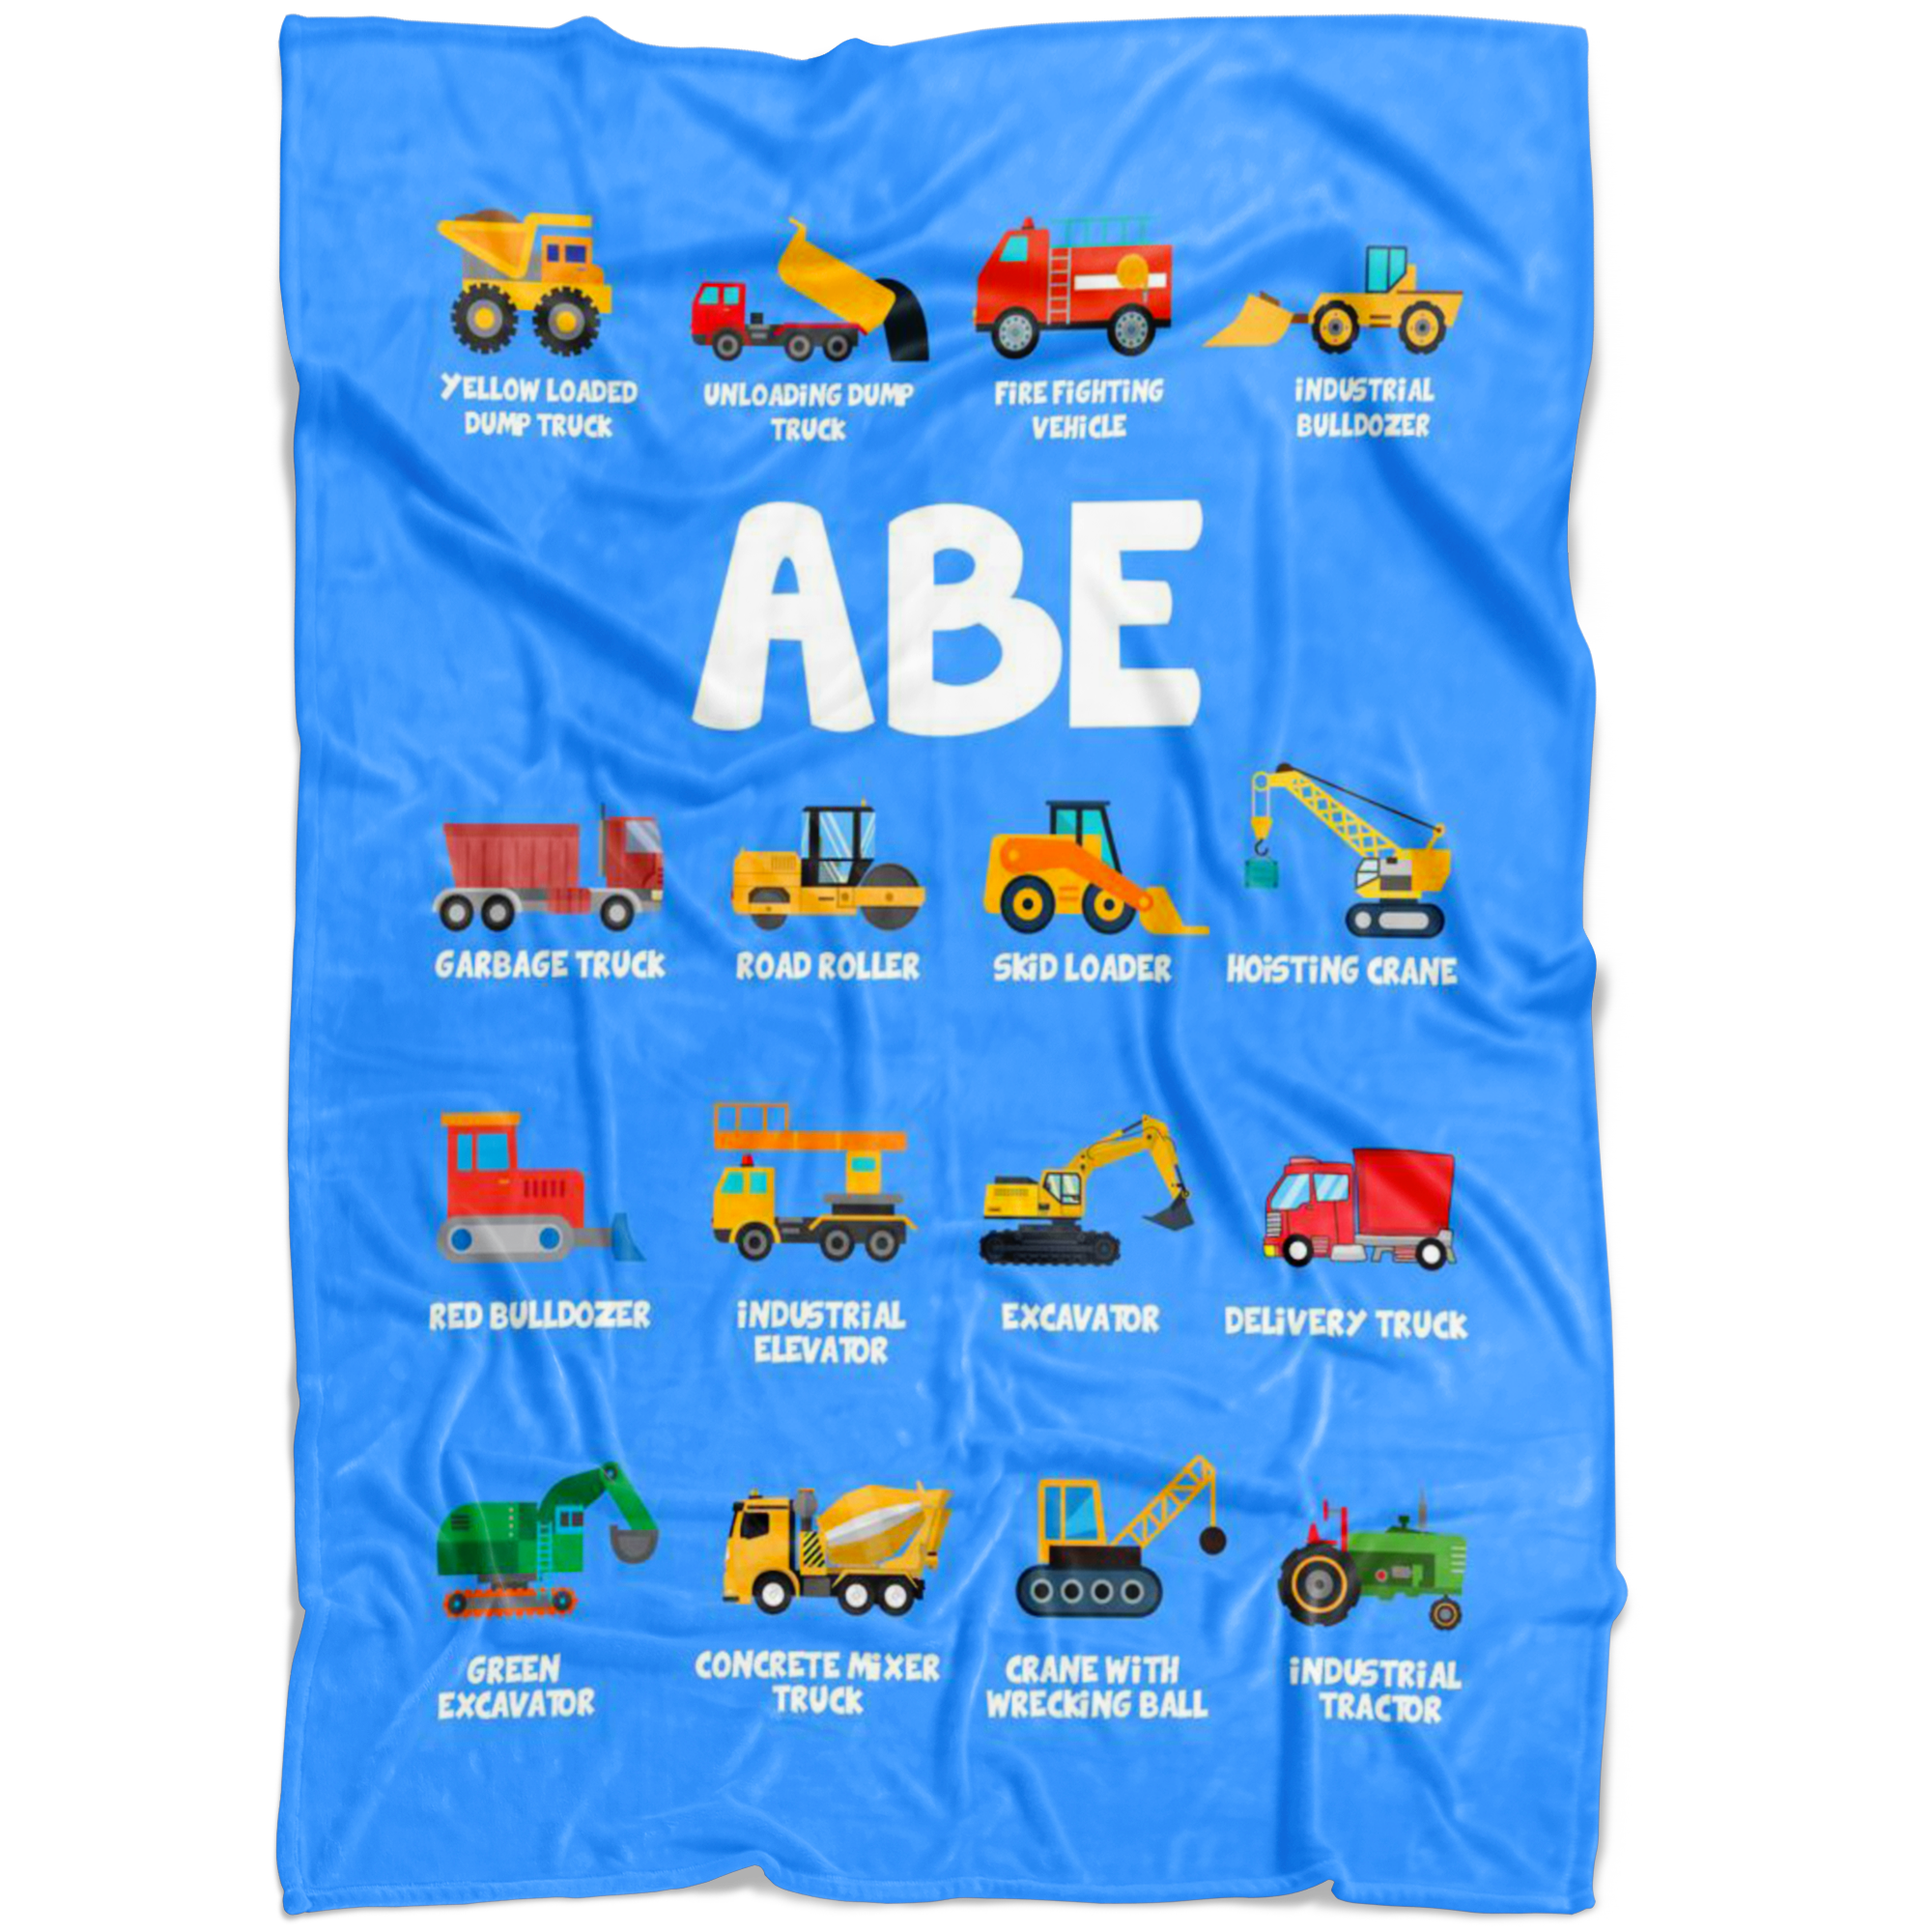 Abe Construction Blanket Blue